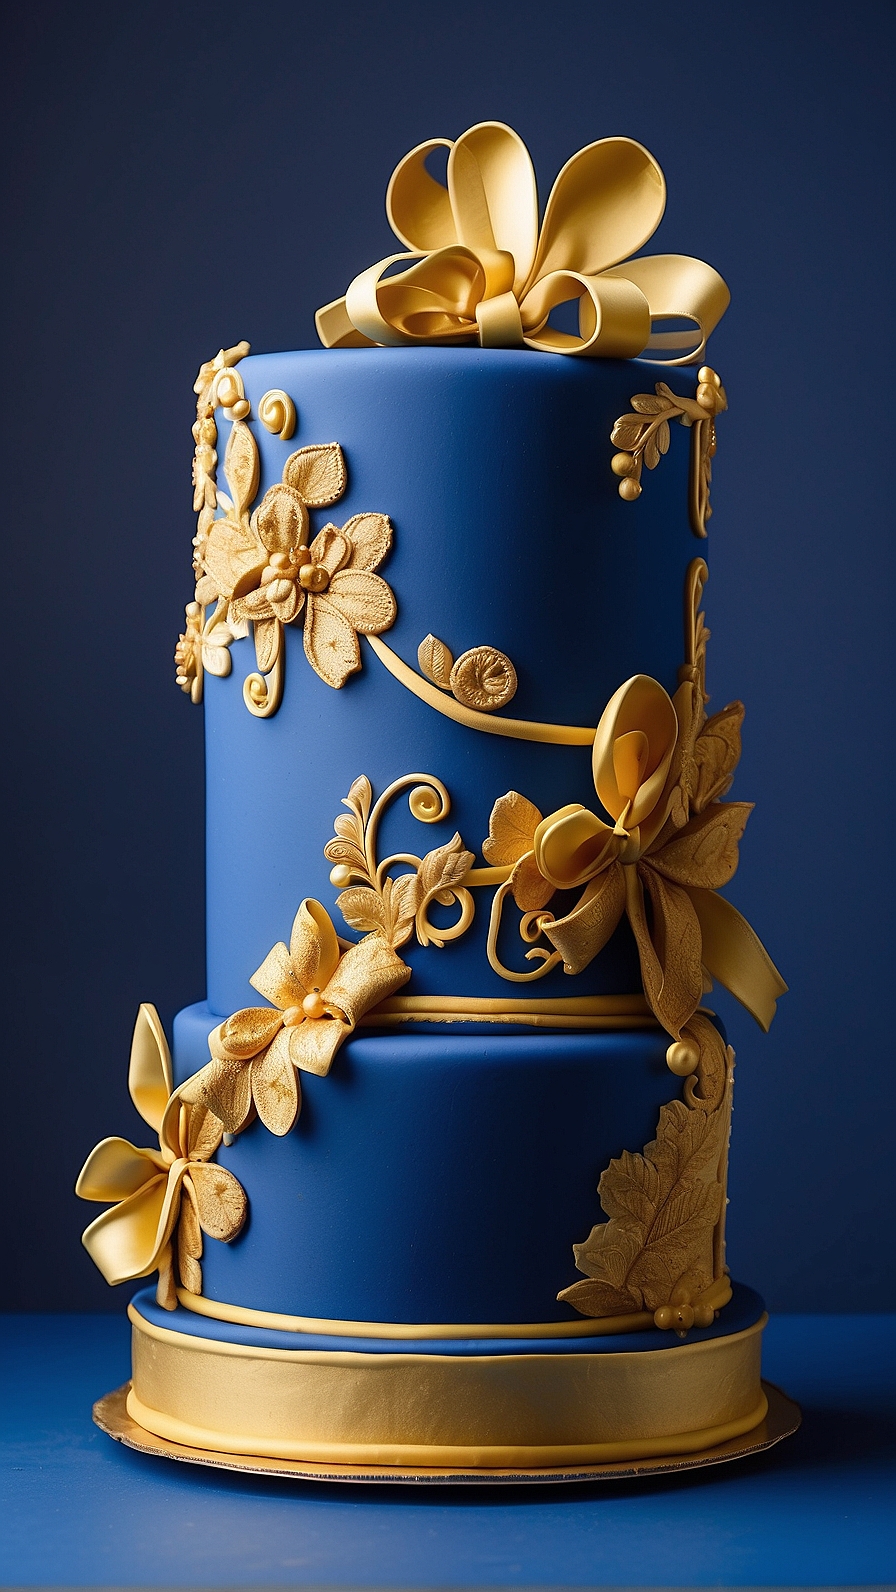 Bright Blue Cake